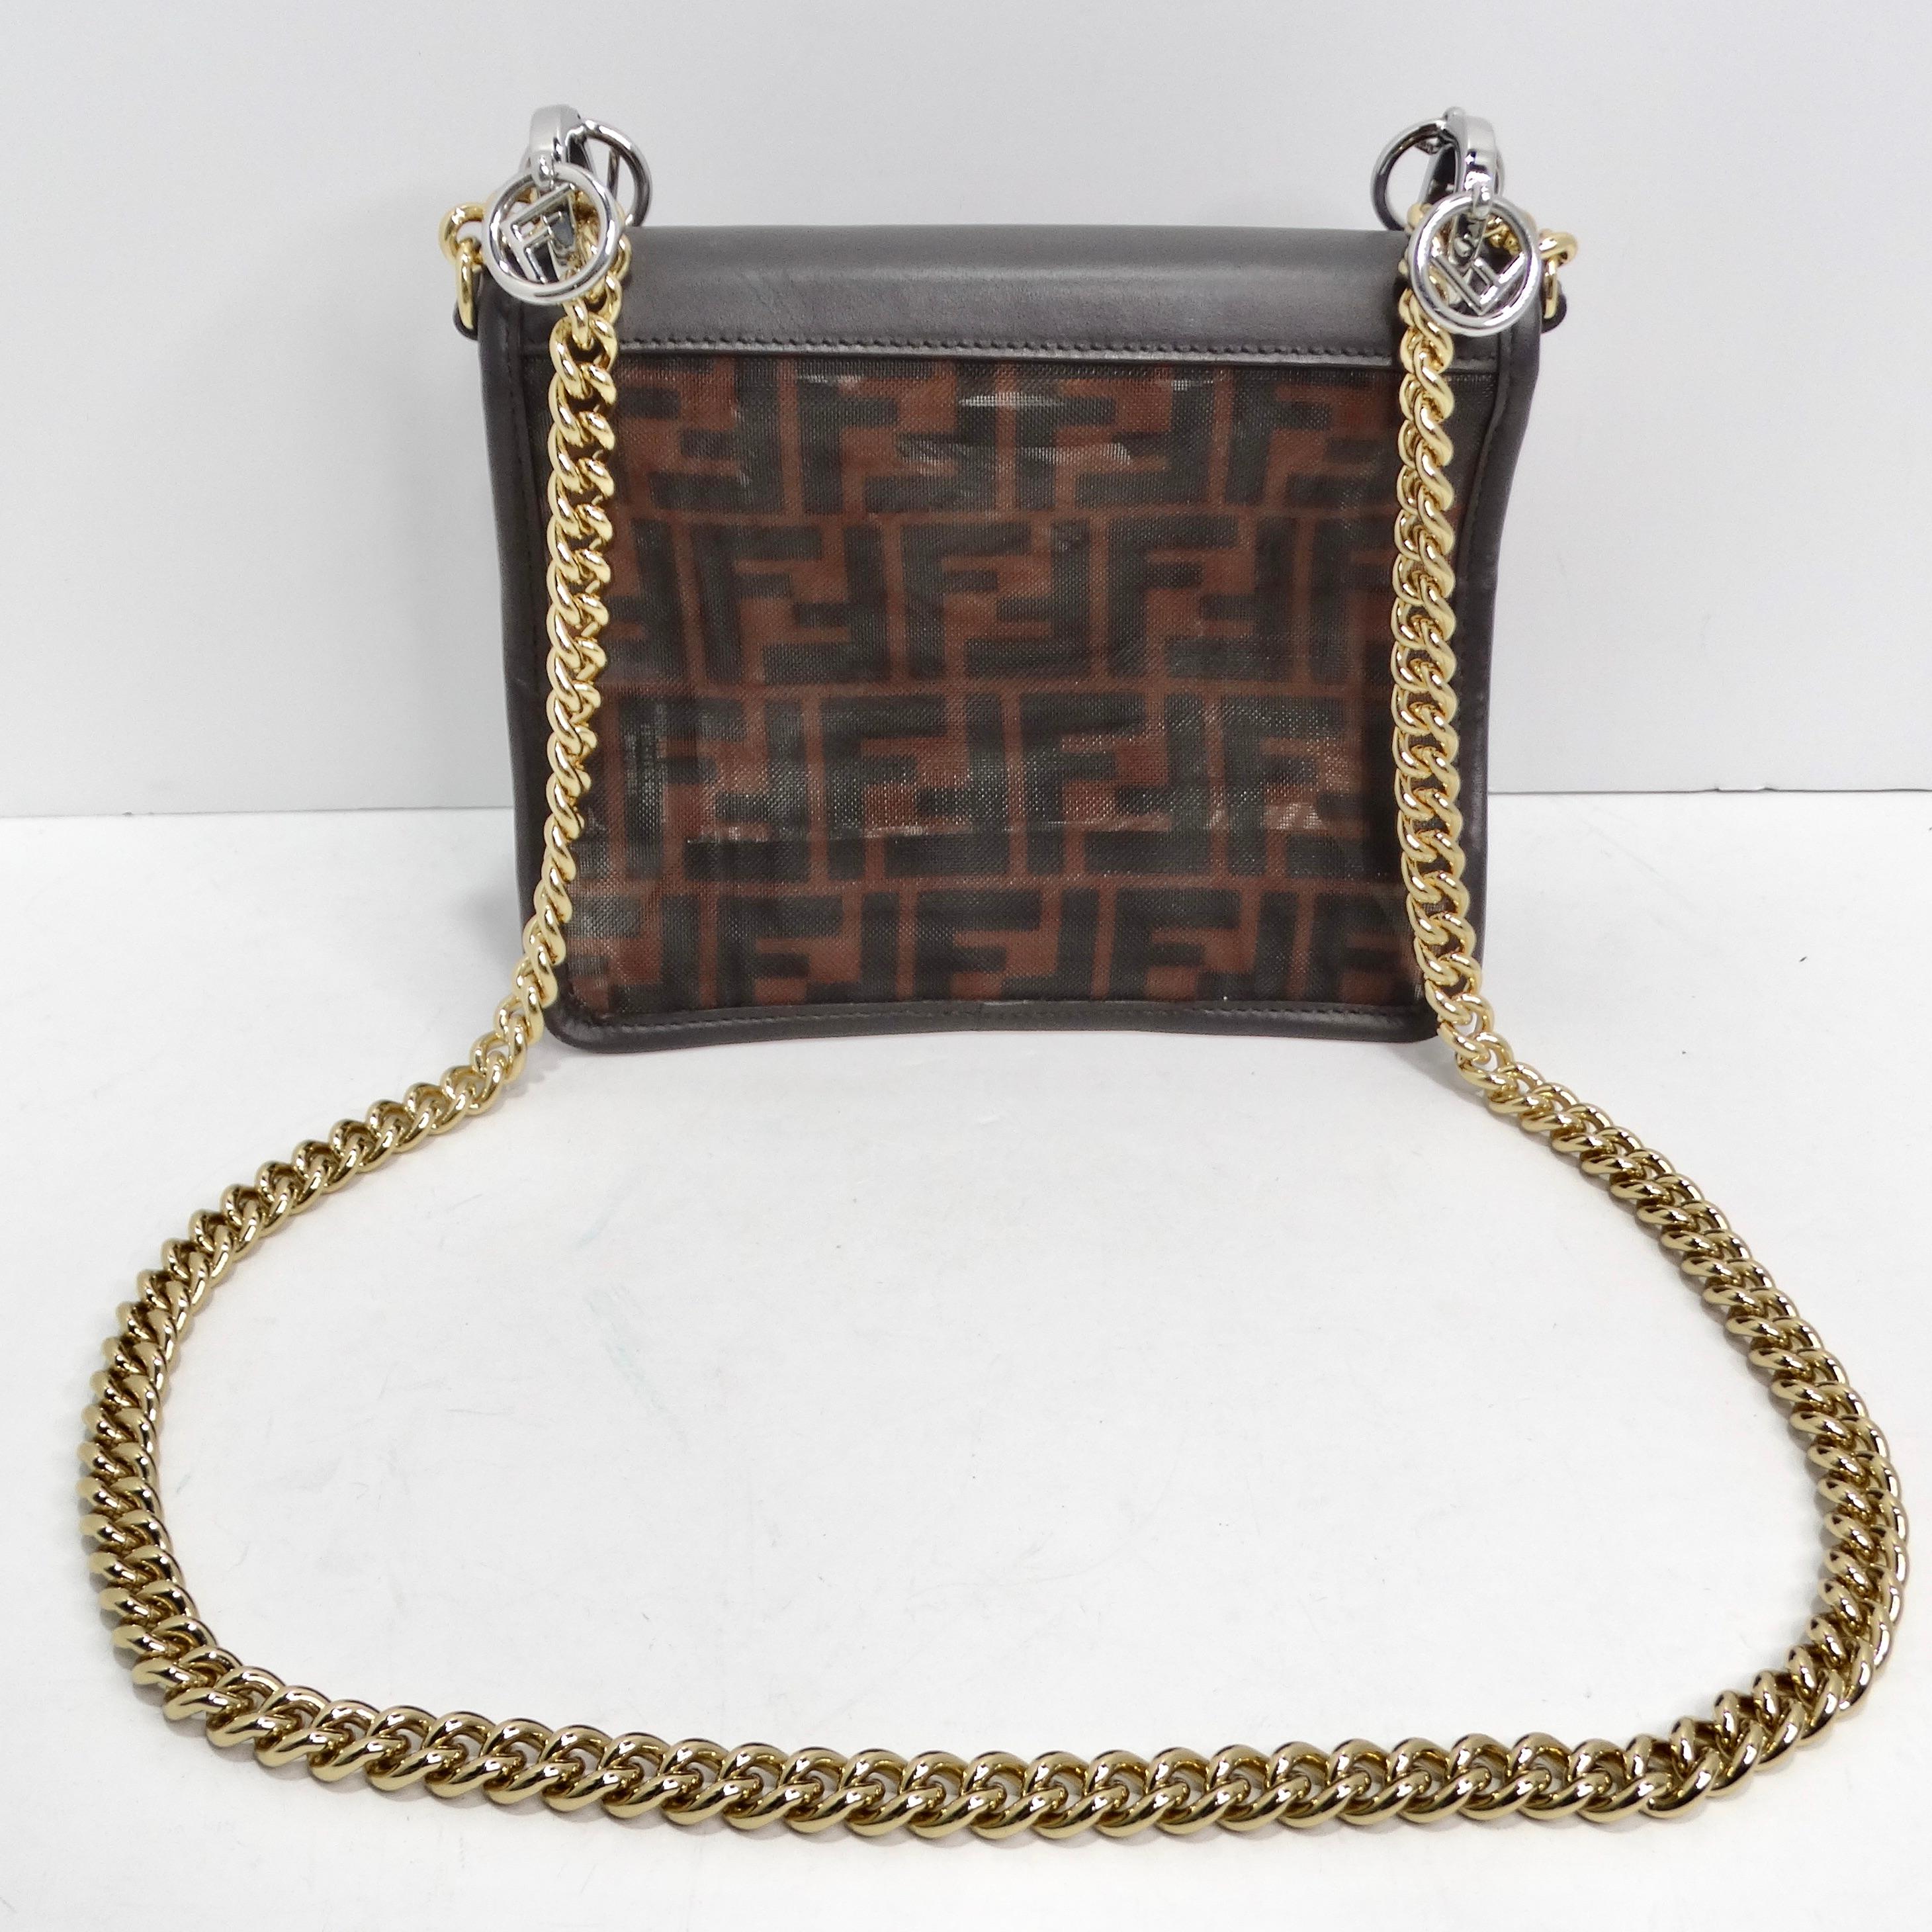 Fendi Kan I F Chain Shoulder Bag In Excellent Condition For Sale In Scottsdale, AZ